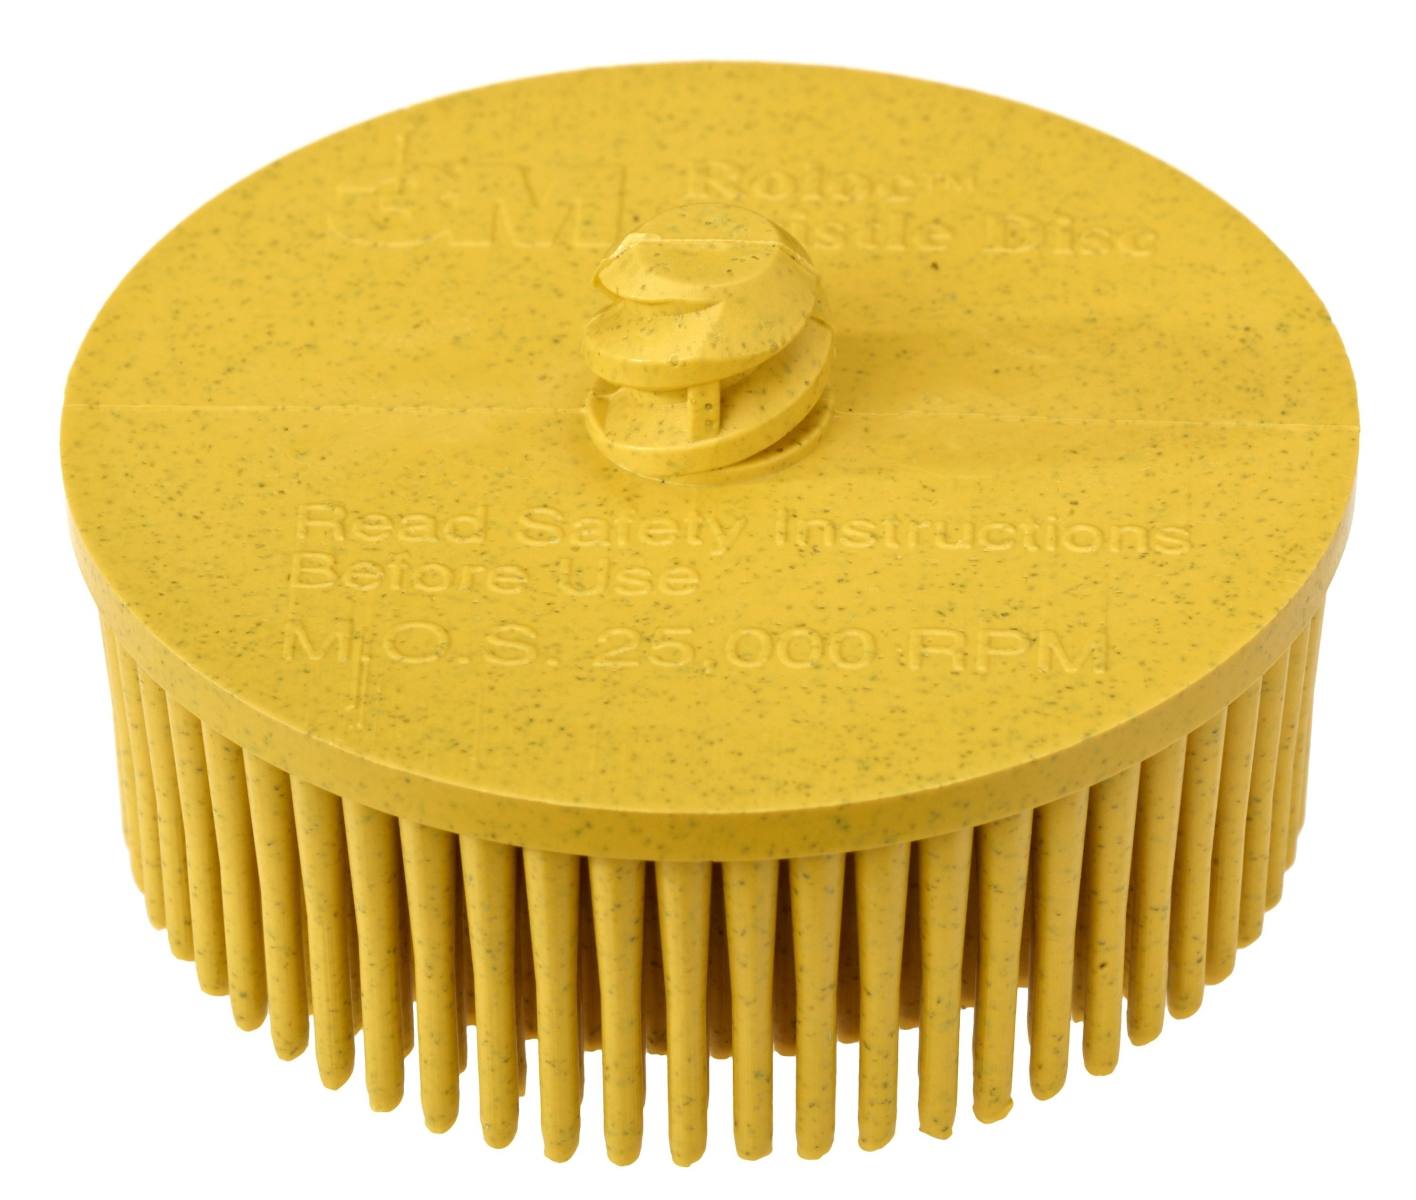 3M Scotch-Brite Roloc Bristle Disc RD-ZB, yellow, 76.2 mm, P80 #07527